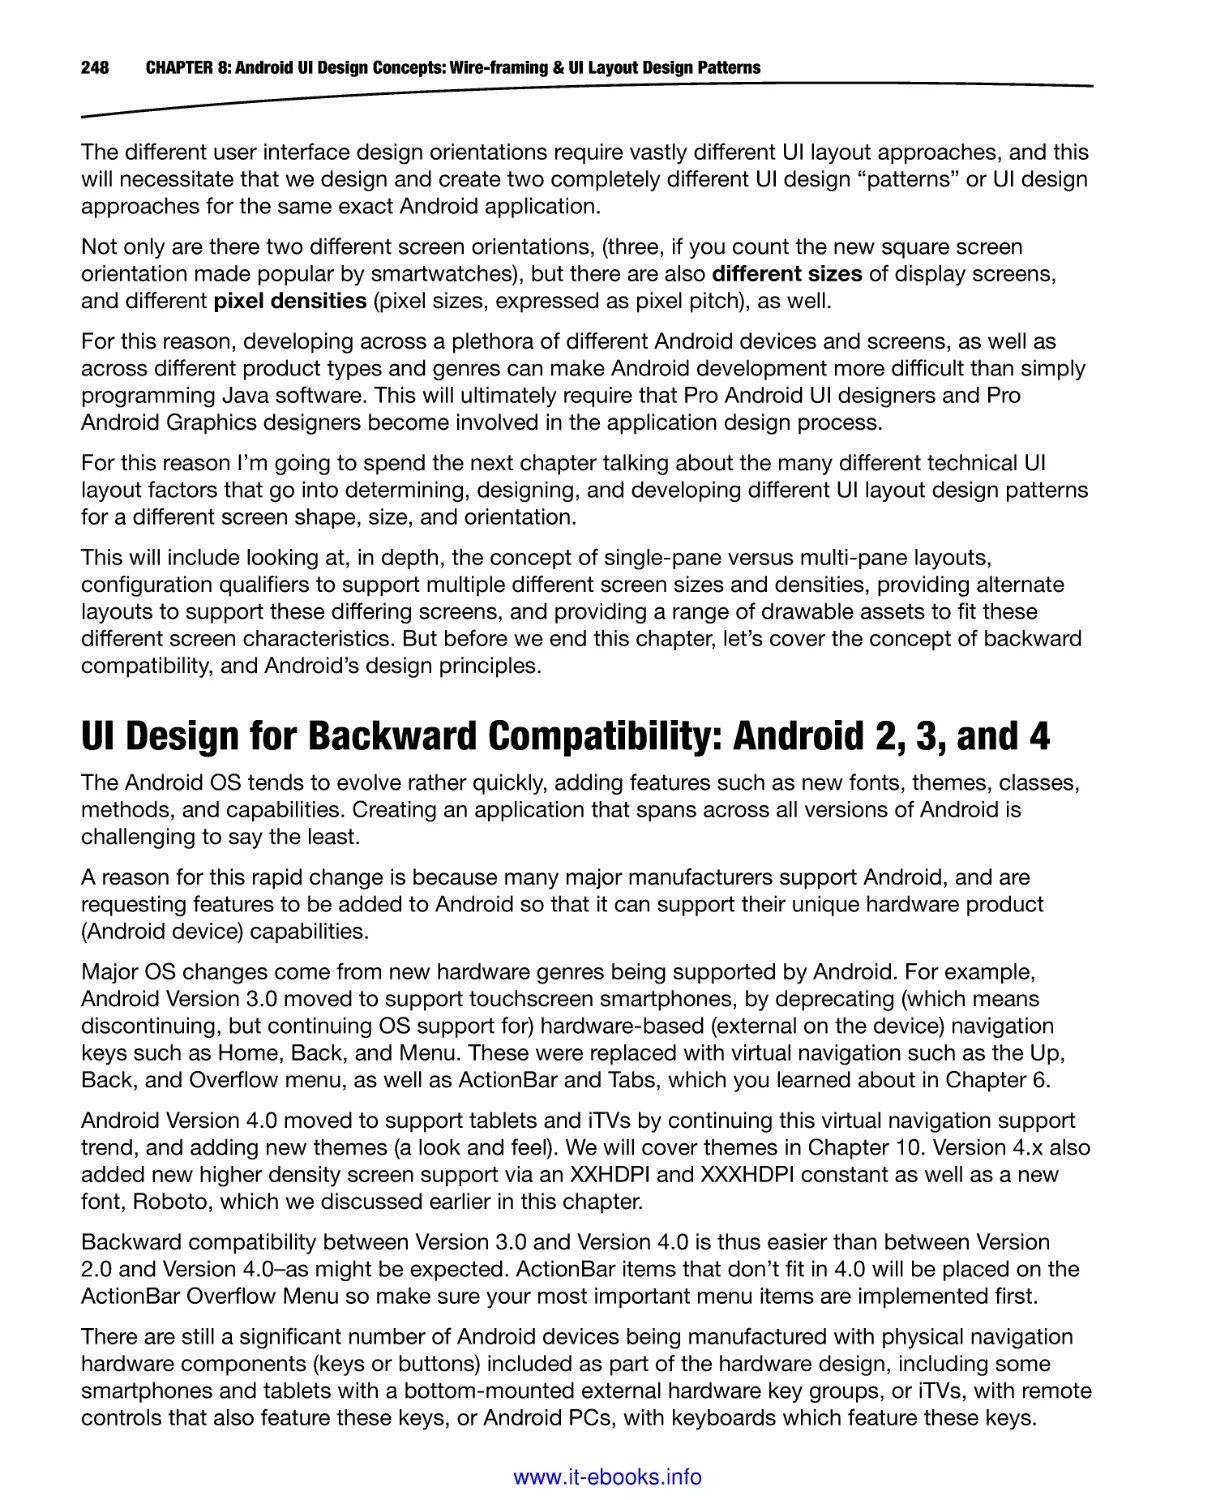 UI Design for Backward Compatibility